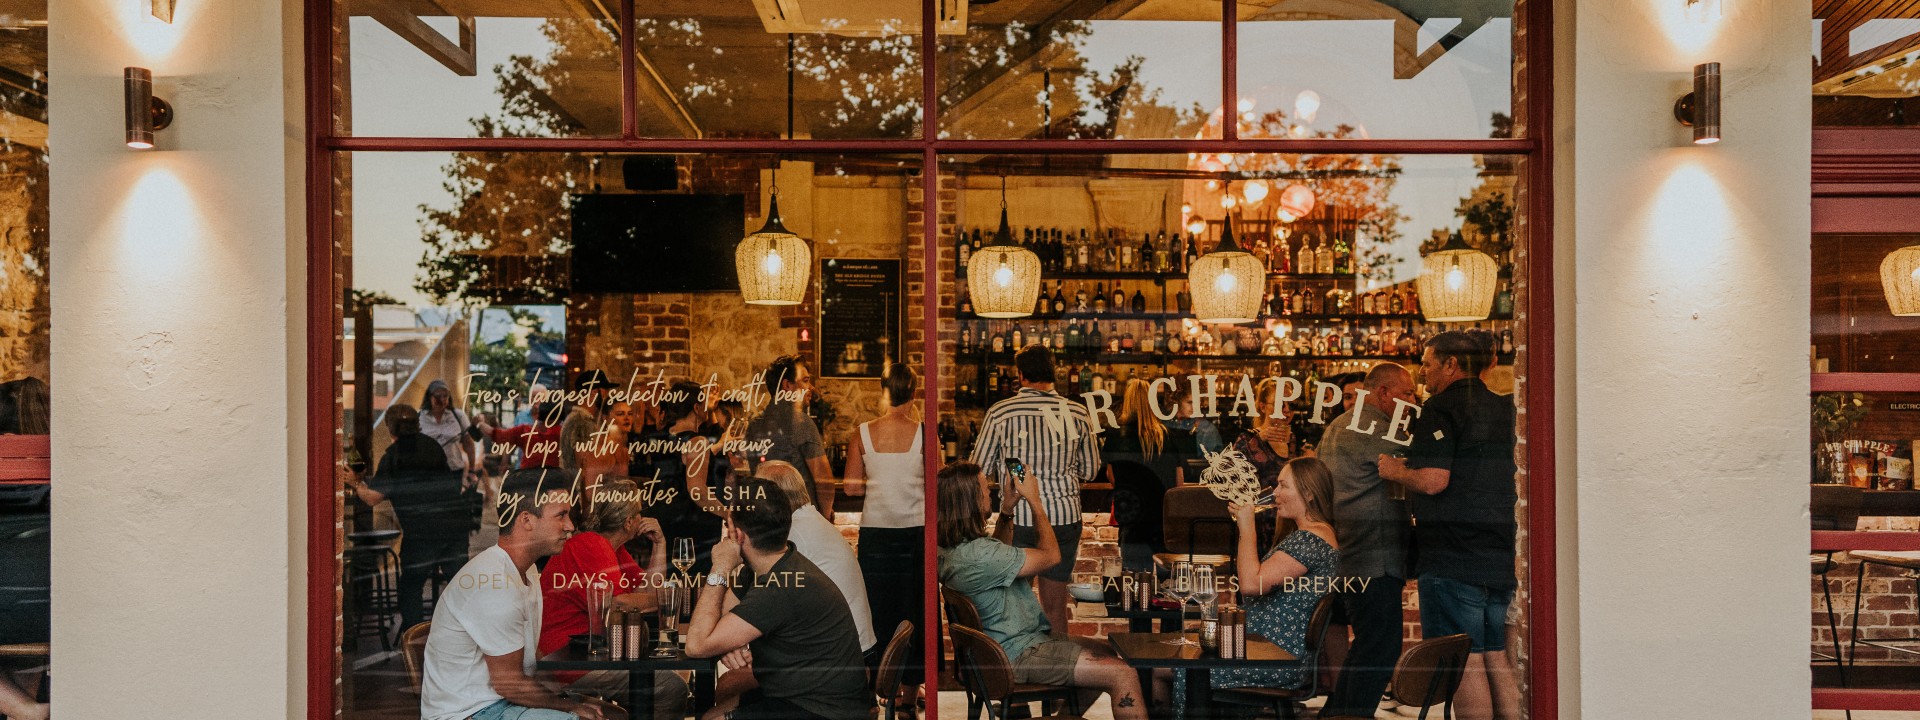 people inside warmly lit bar enjoying food, drinks and chats